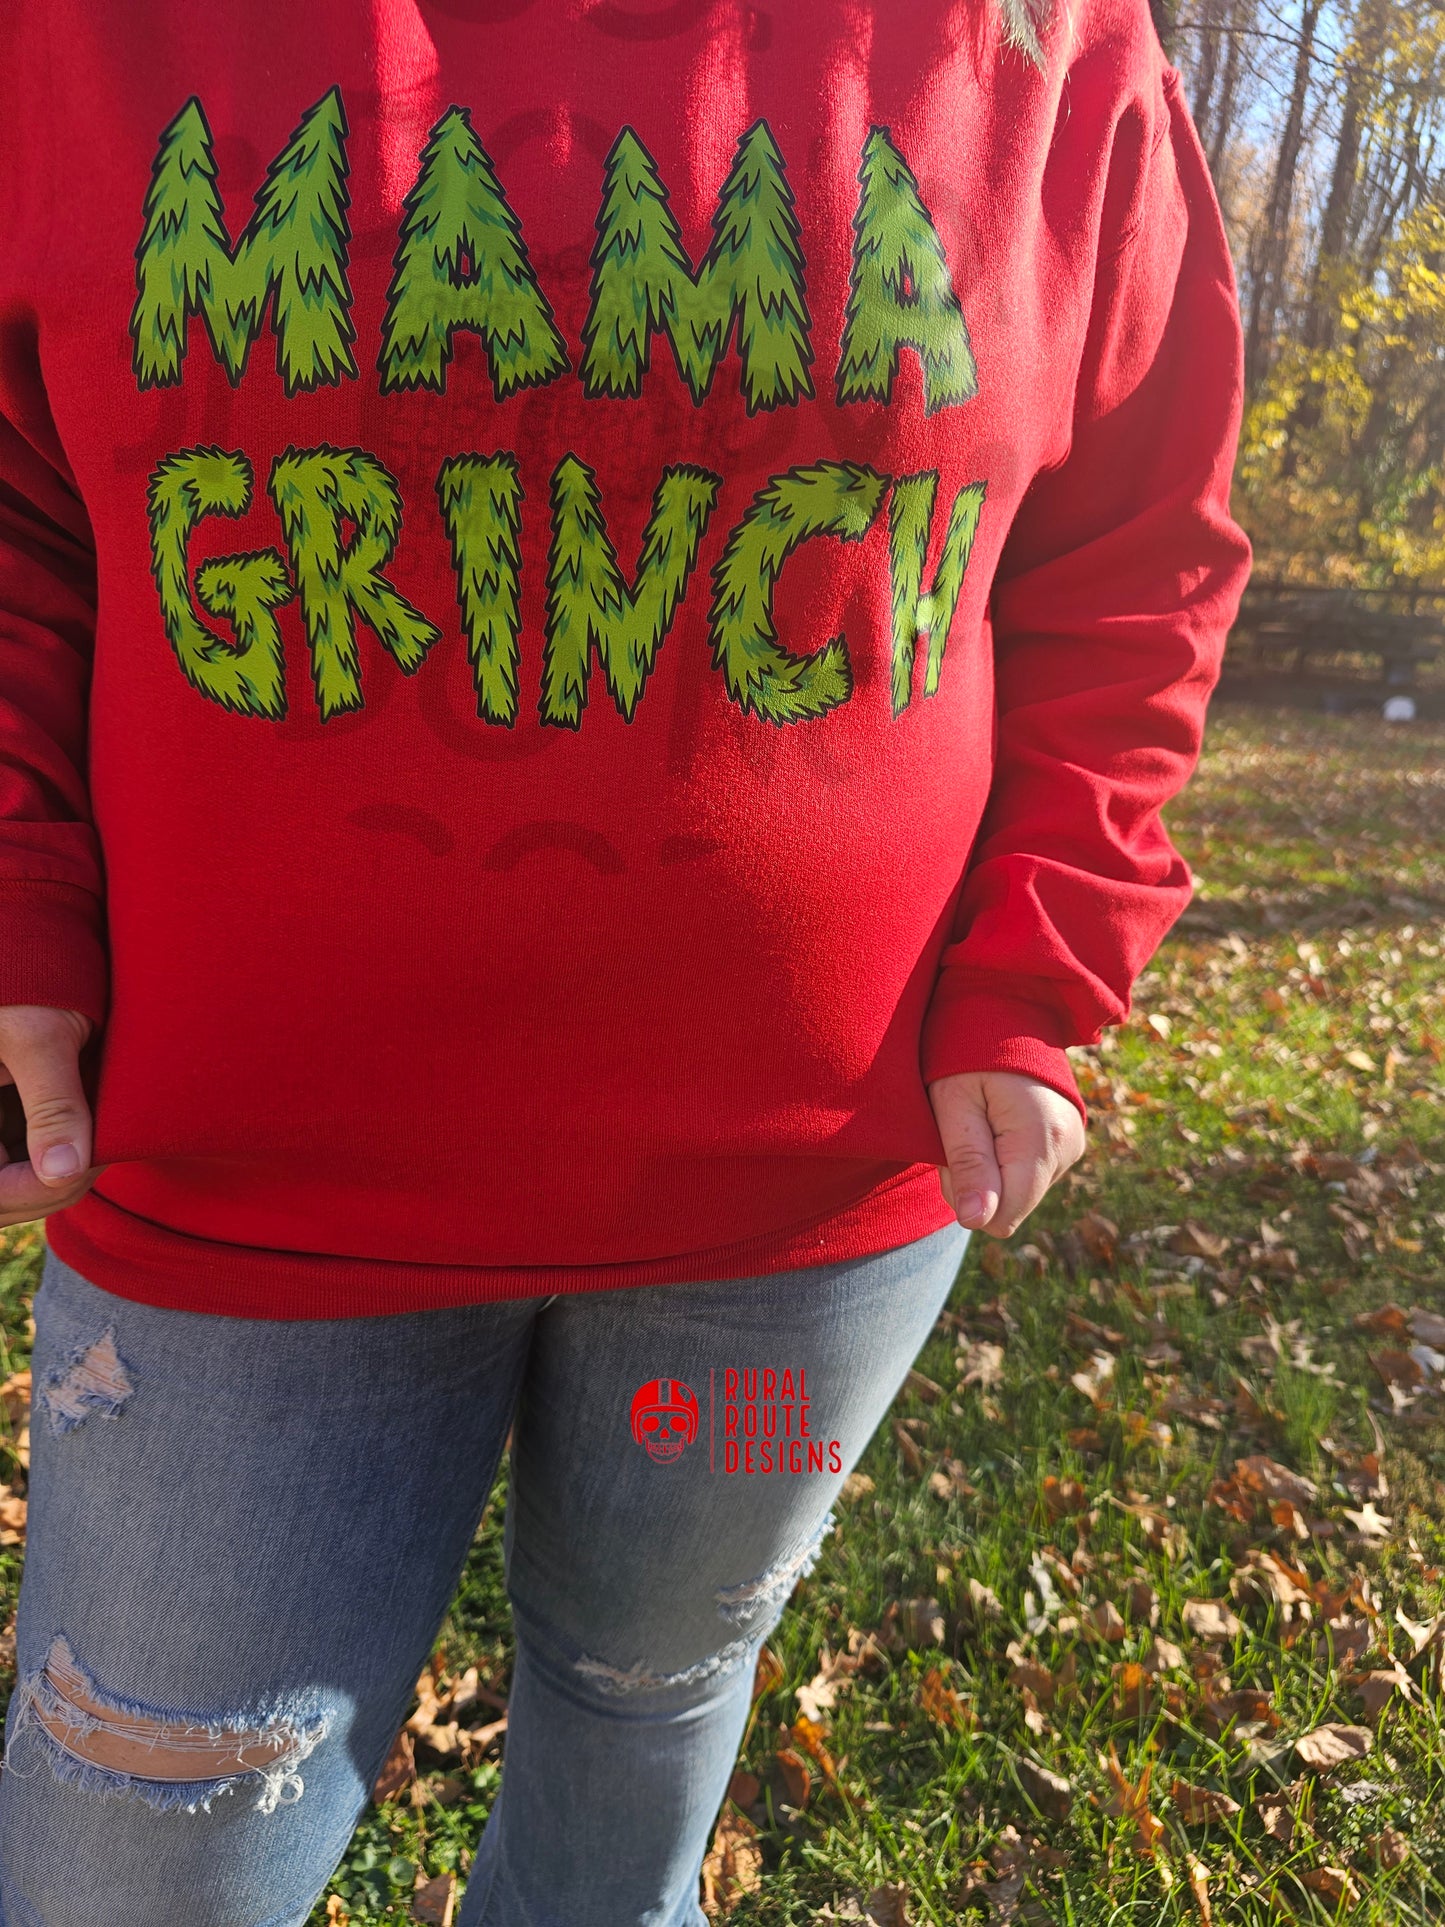 Mama Grinch